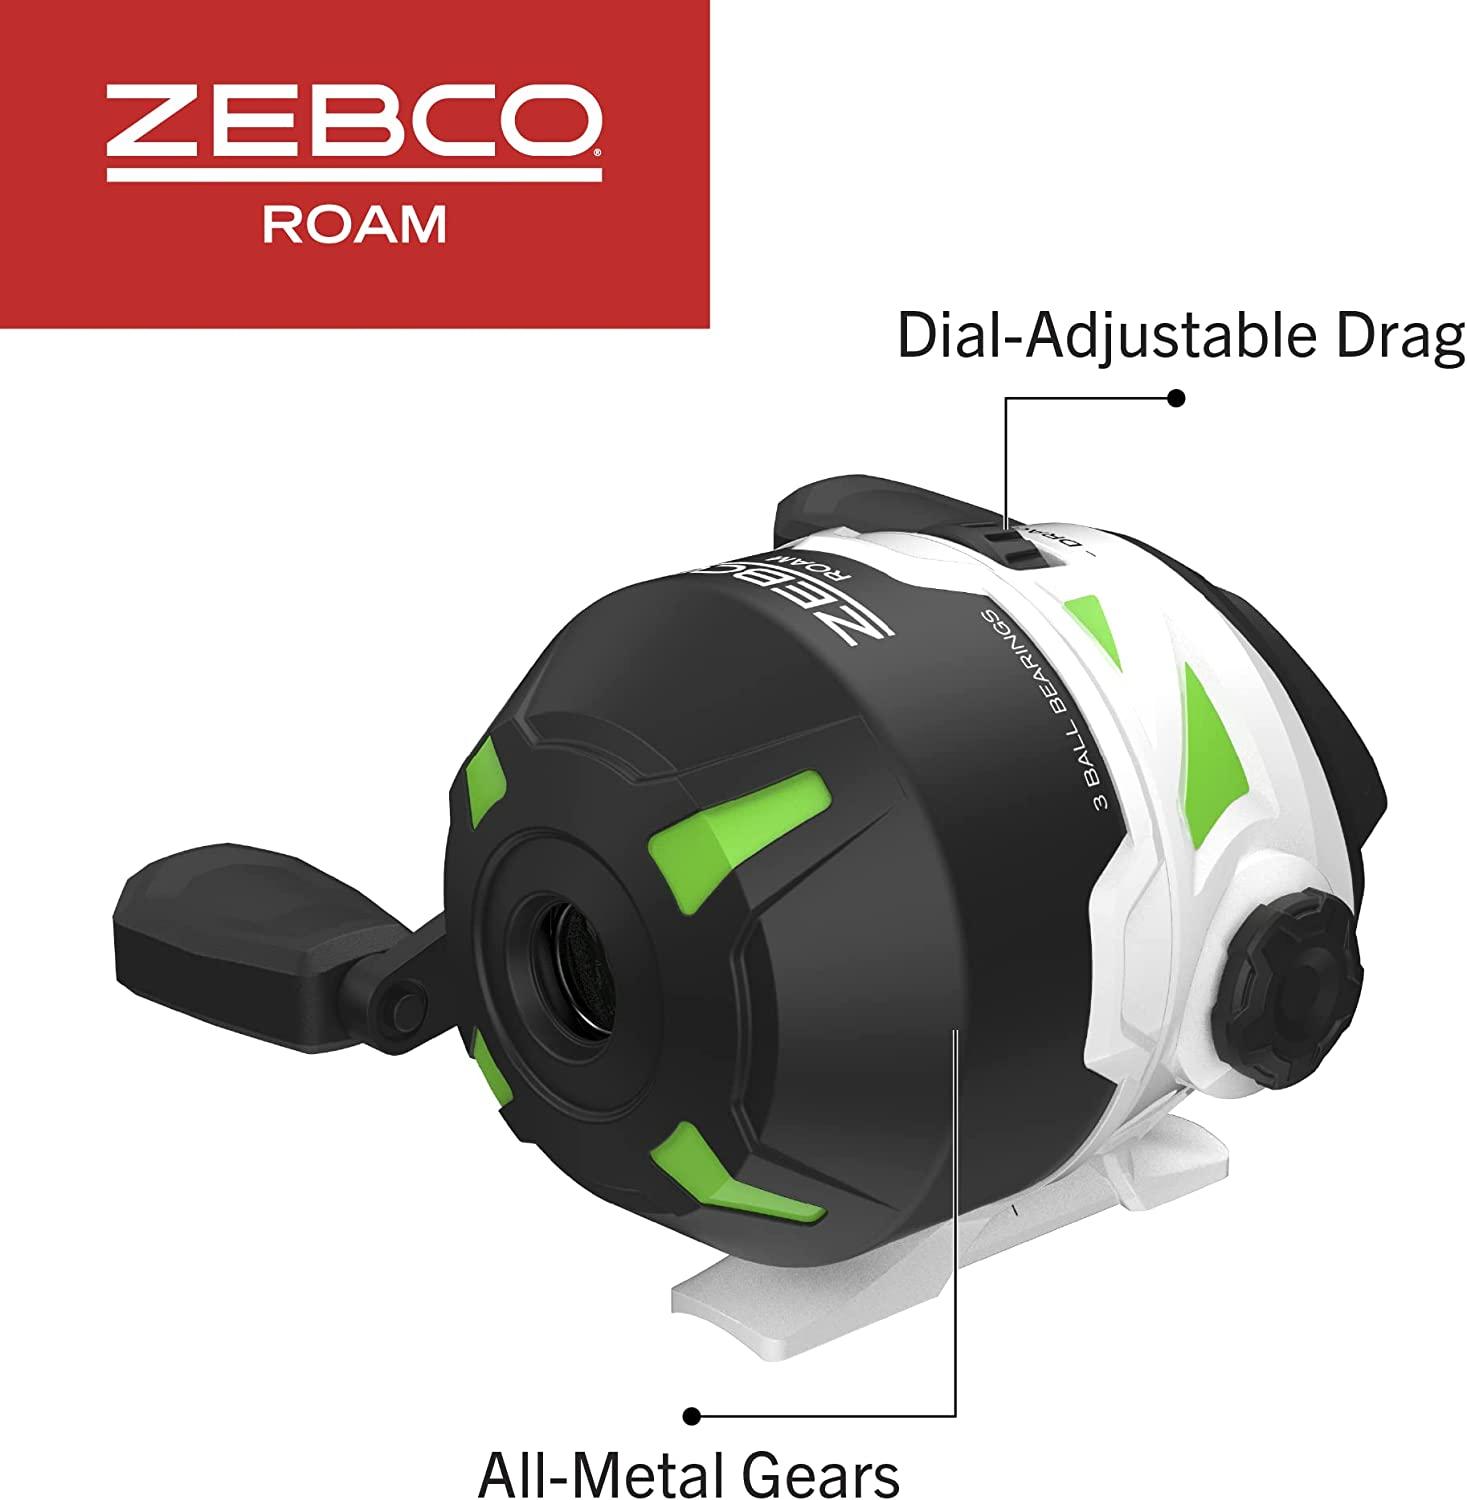 Zebco Roam Spincast Combo Rod and Reel 6'0'' / M / Green